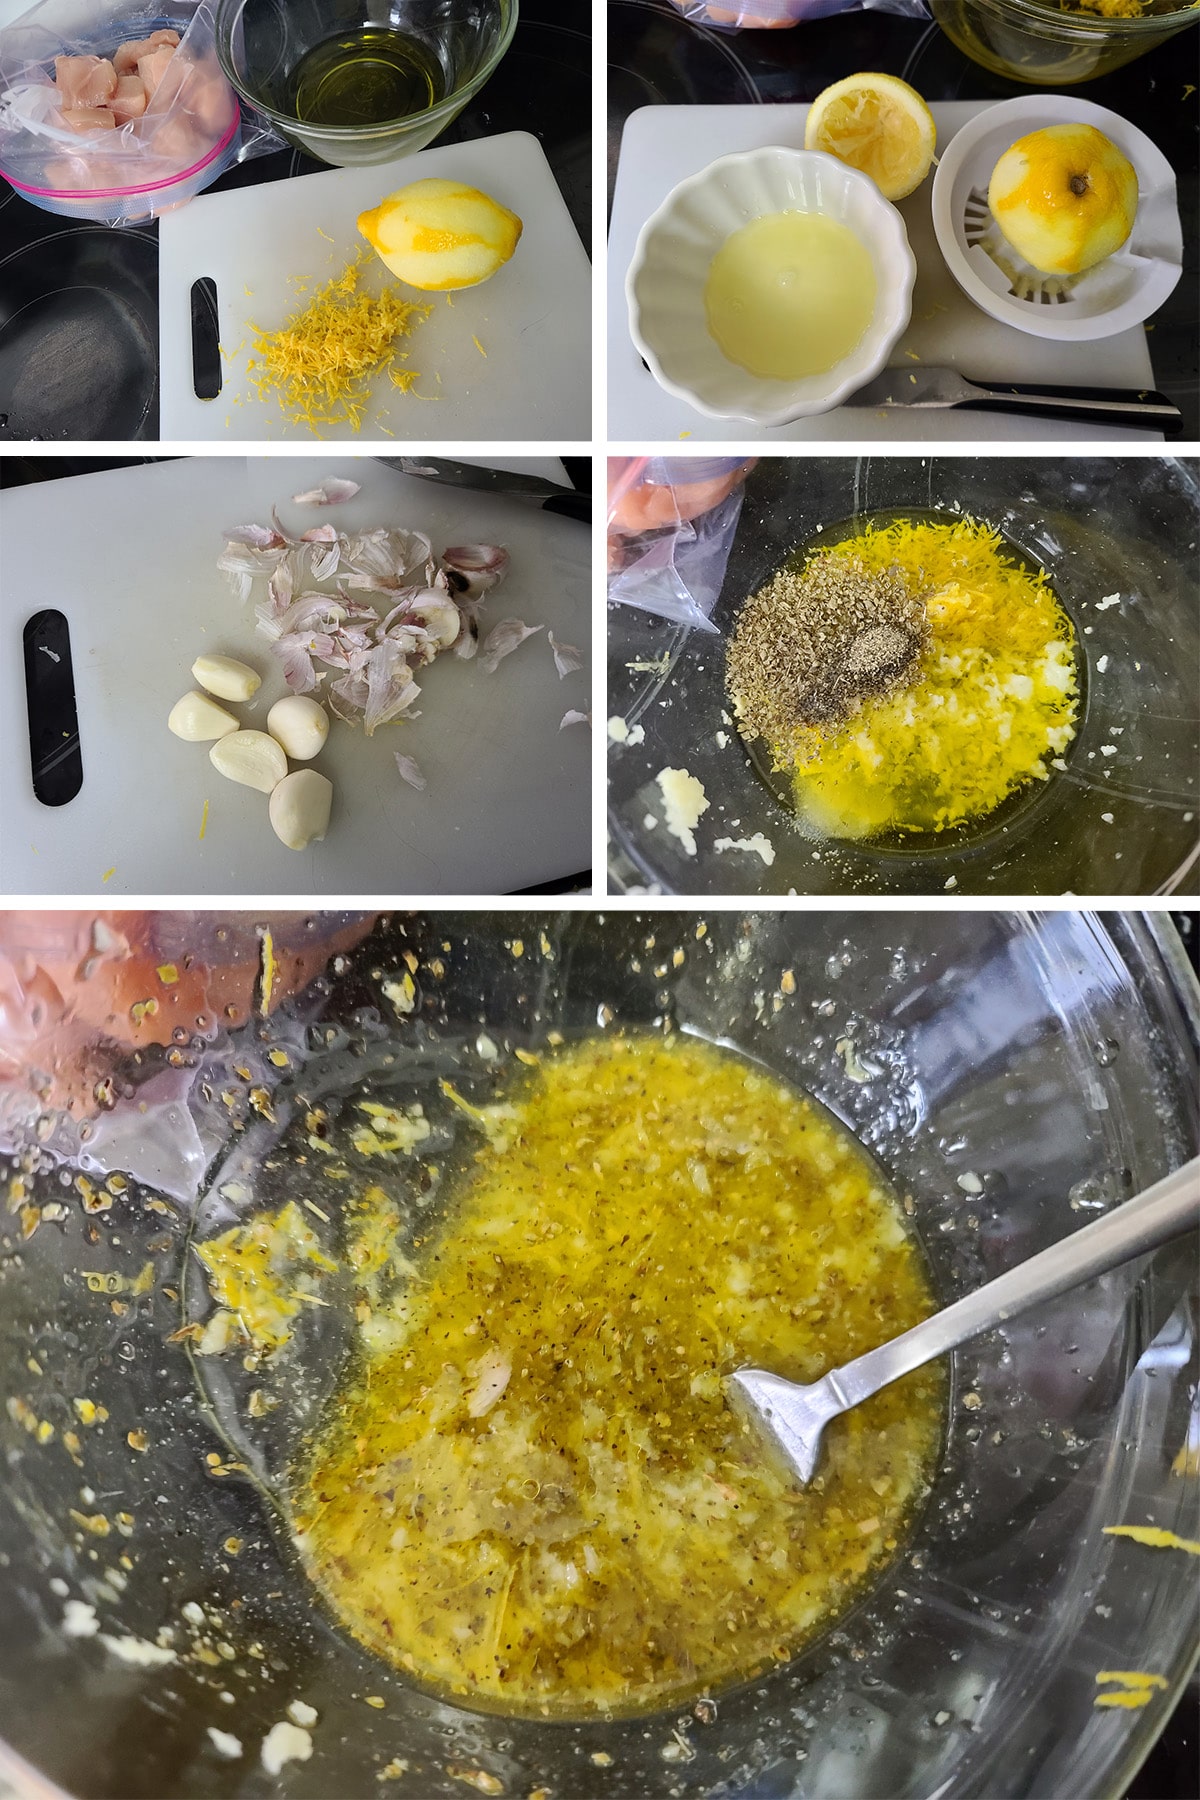 A 5 part image showing the souvlaki marinade being made.